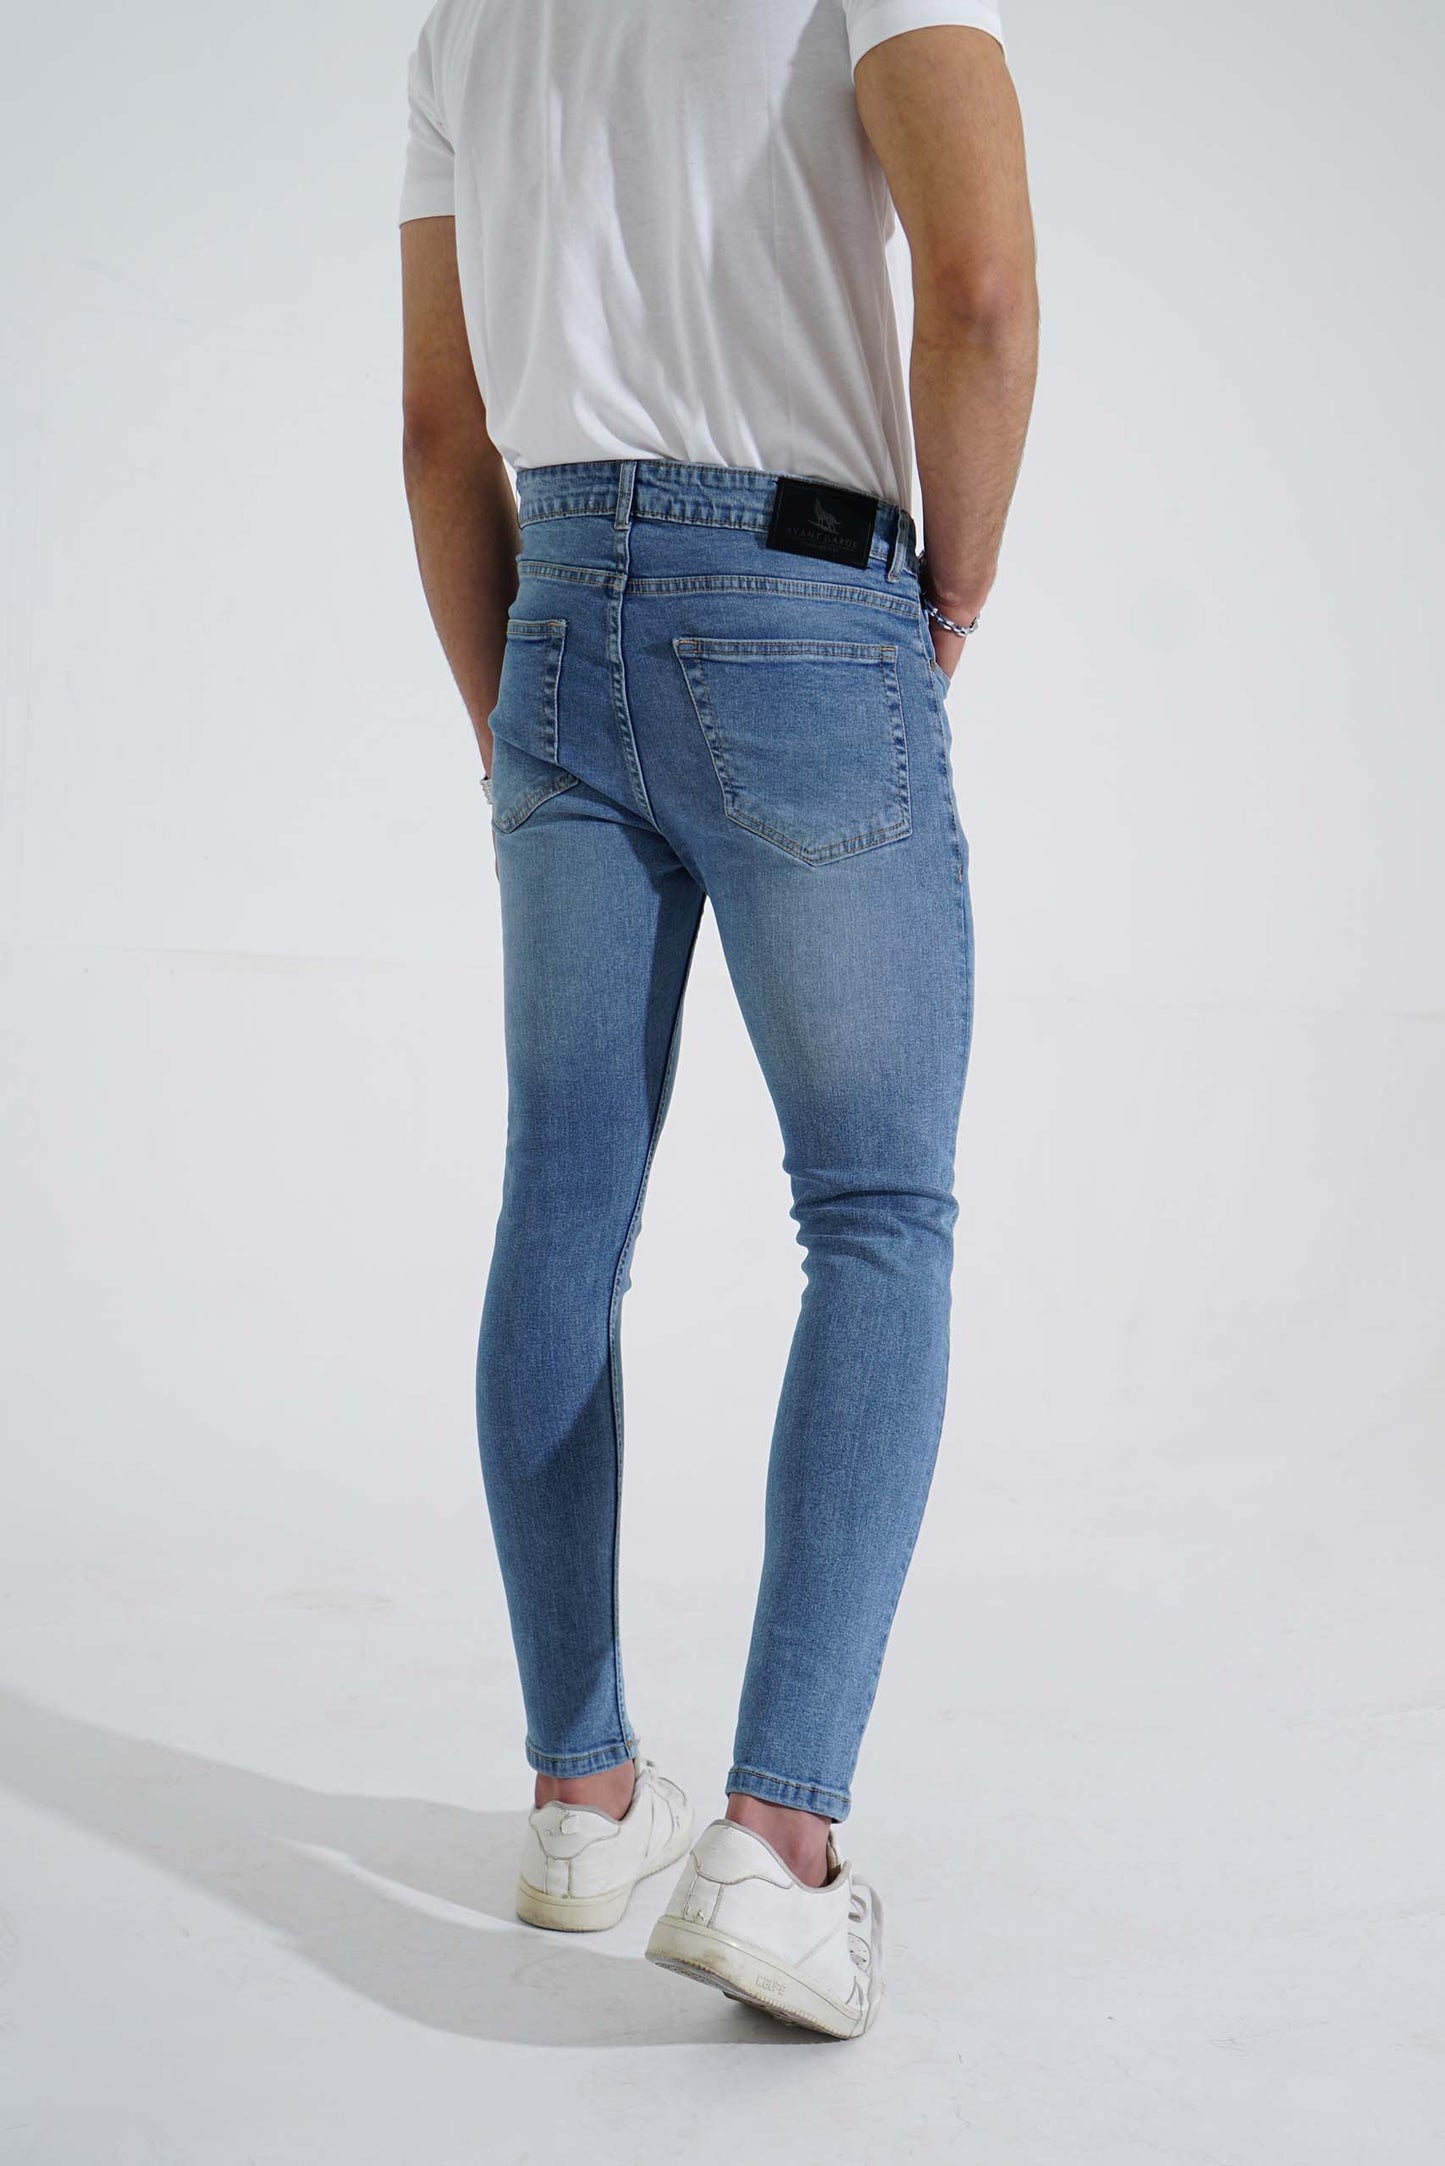 Blue Jeans - Skinny Fit (JN053)